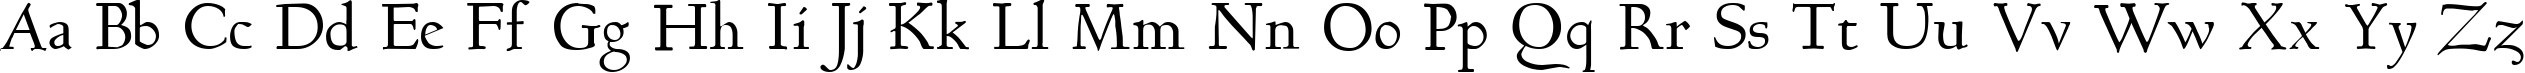 Пример написания английского алфавита шрифтом Bertham